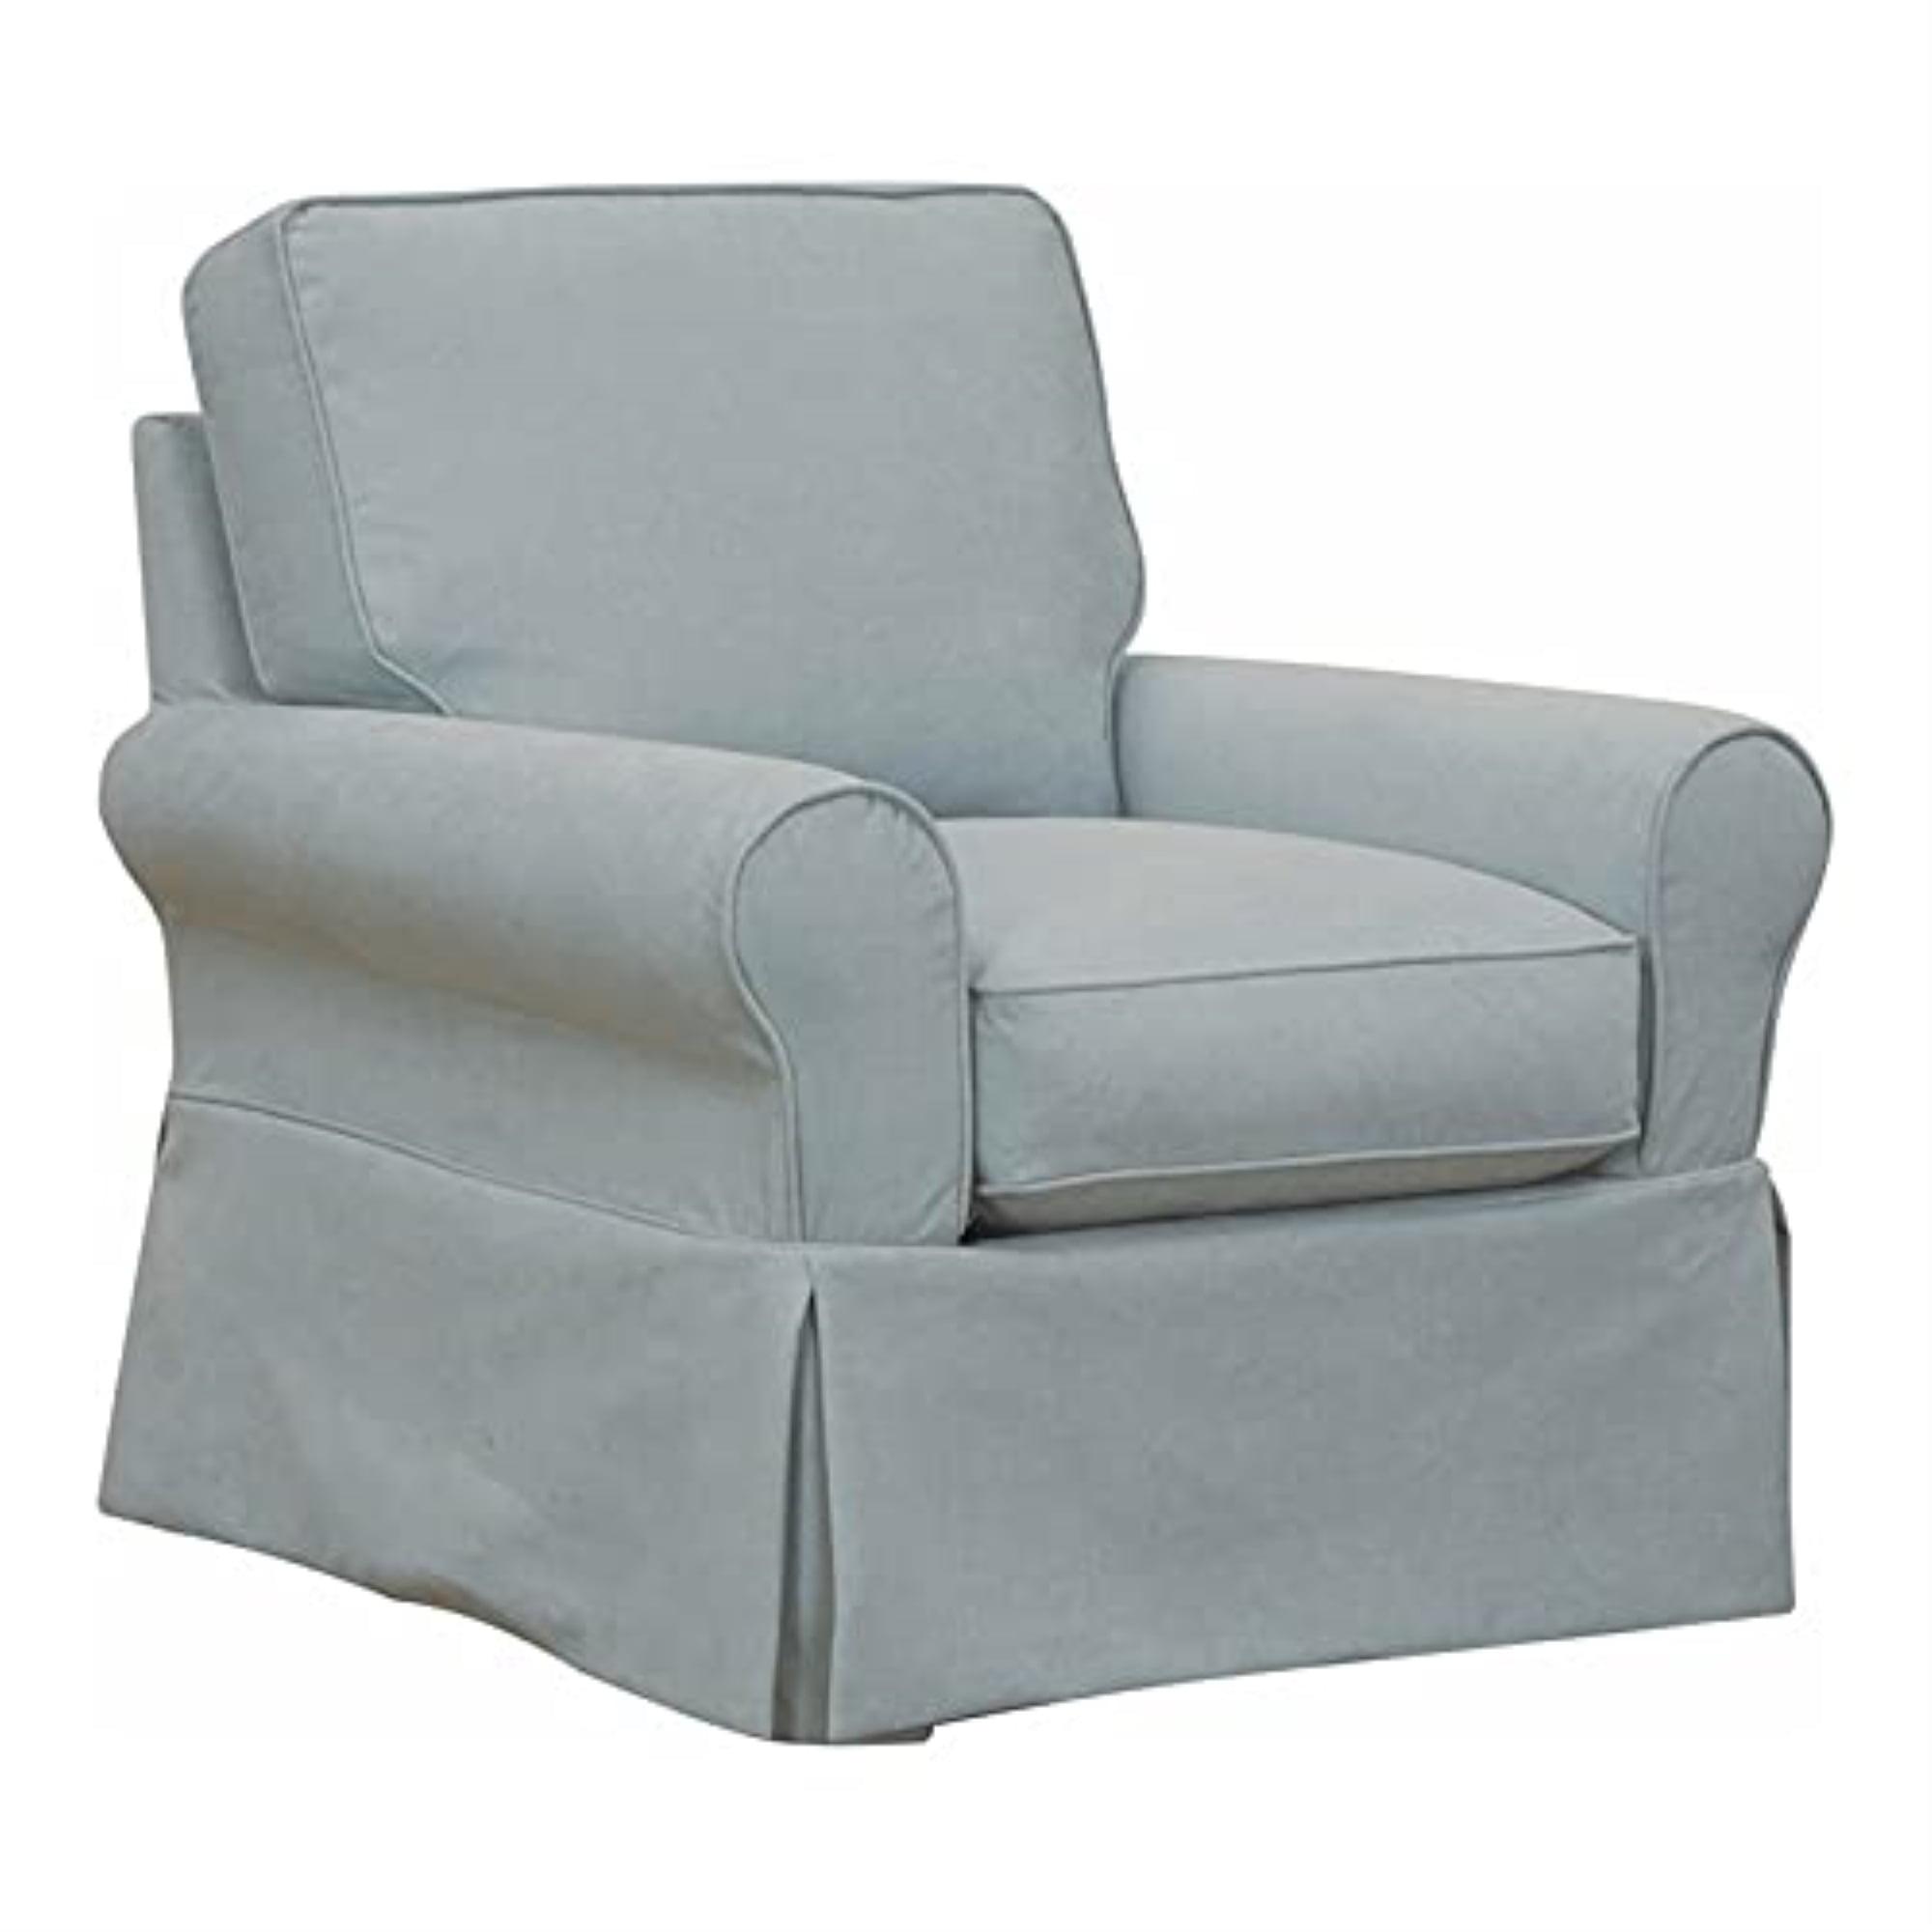 Ocean Blue Polyester Slipcover for Box Cushion Chair